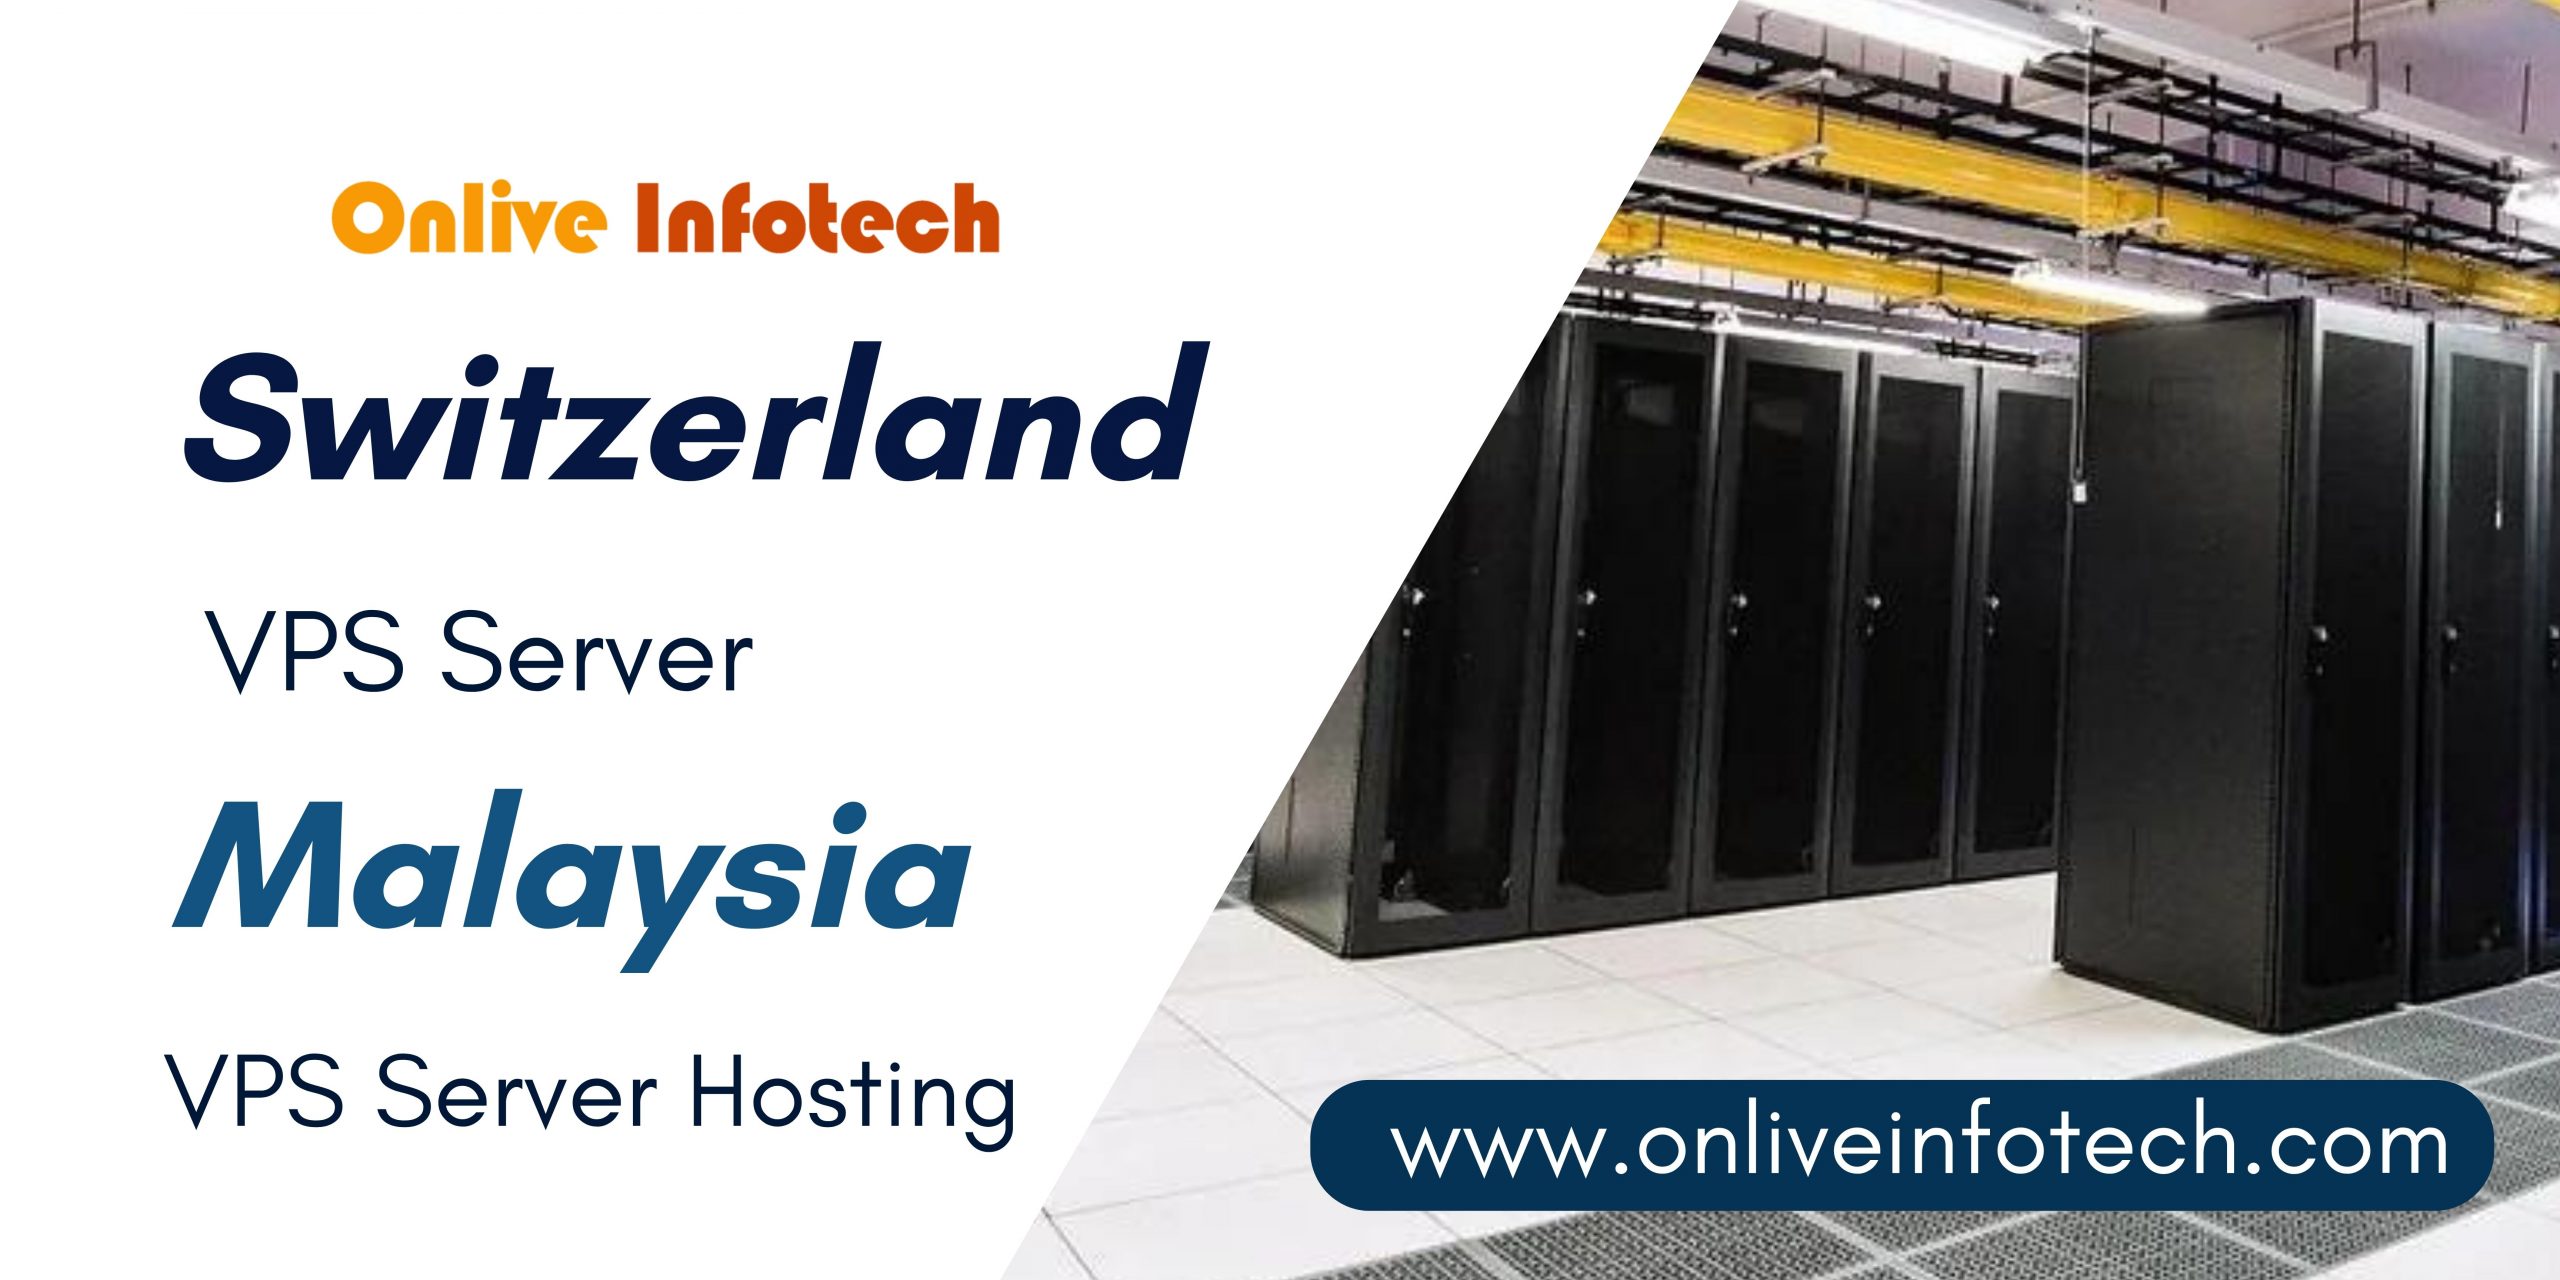 Switzerland VPS Server Malaysia VPS Server